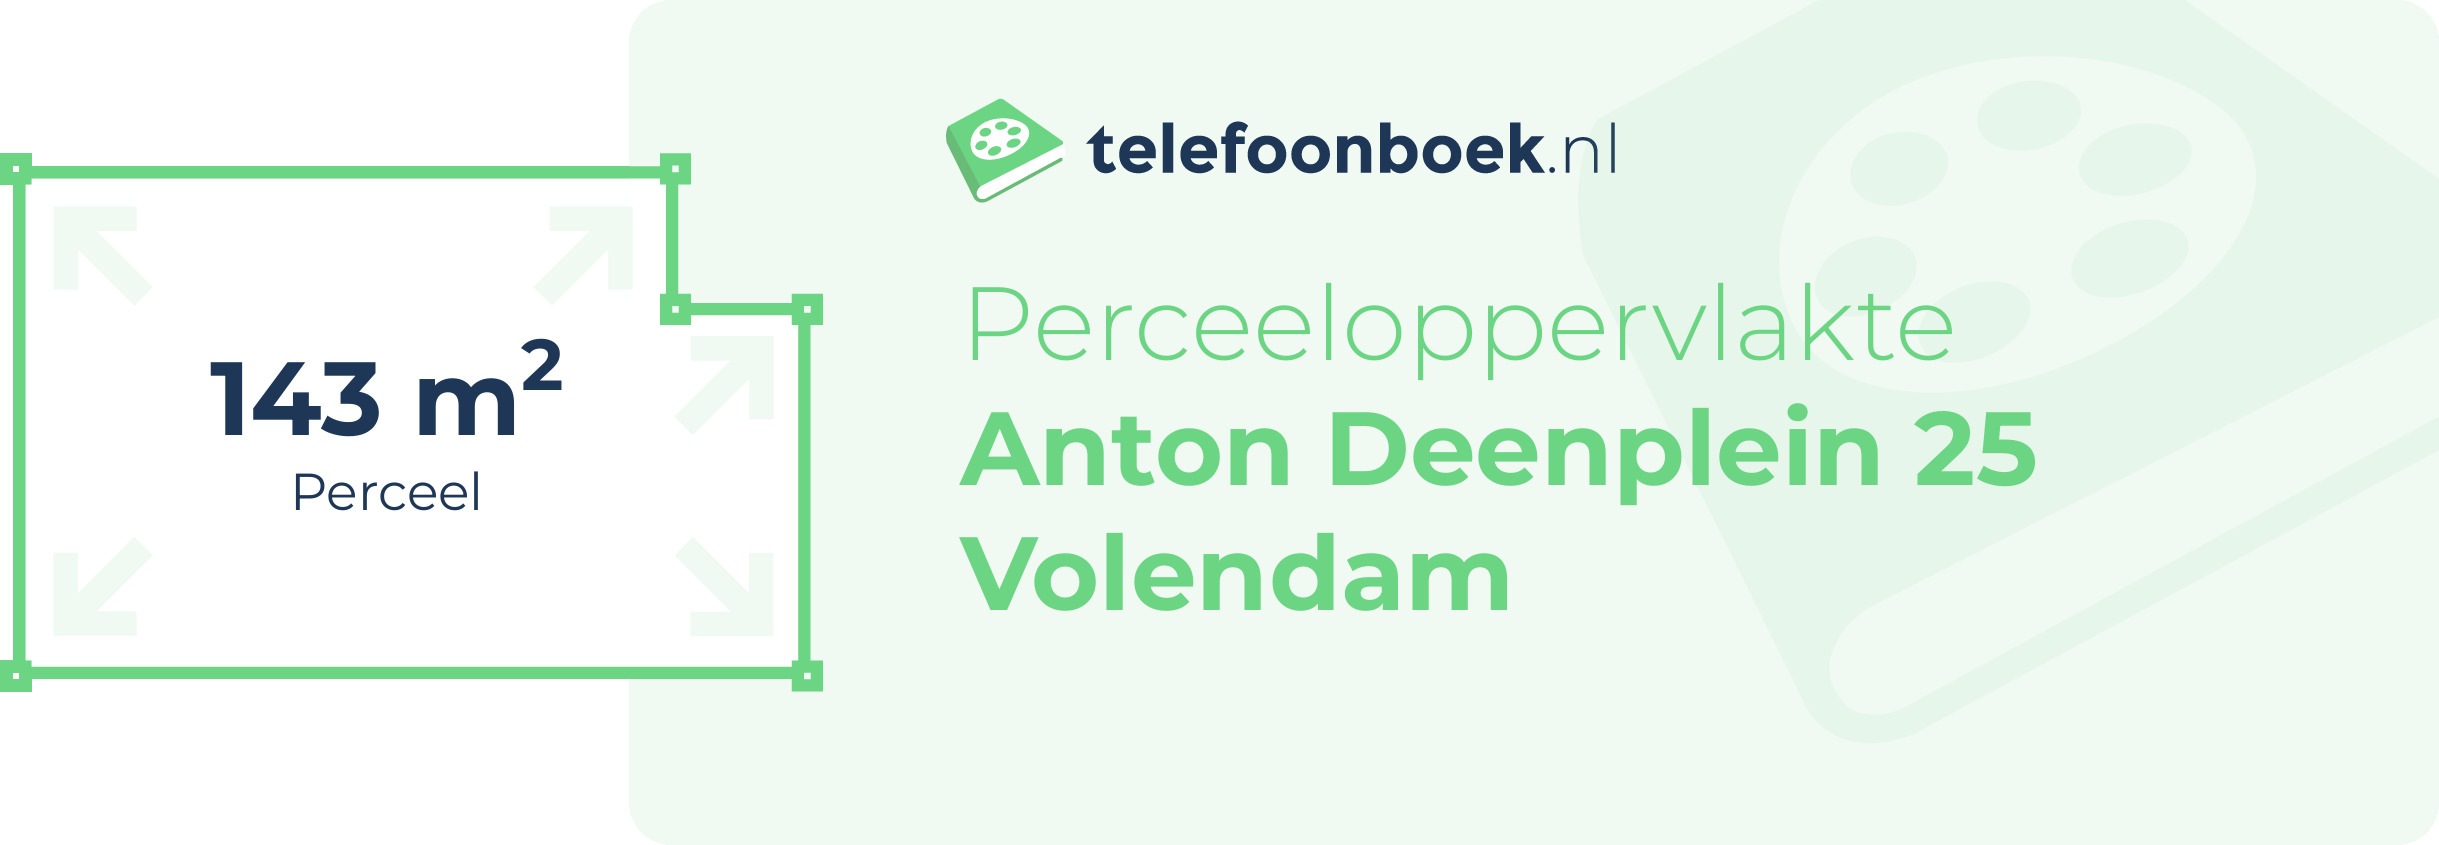 Perceeloppervlakte Anton Deenplein 25 Volendam